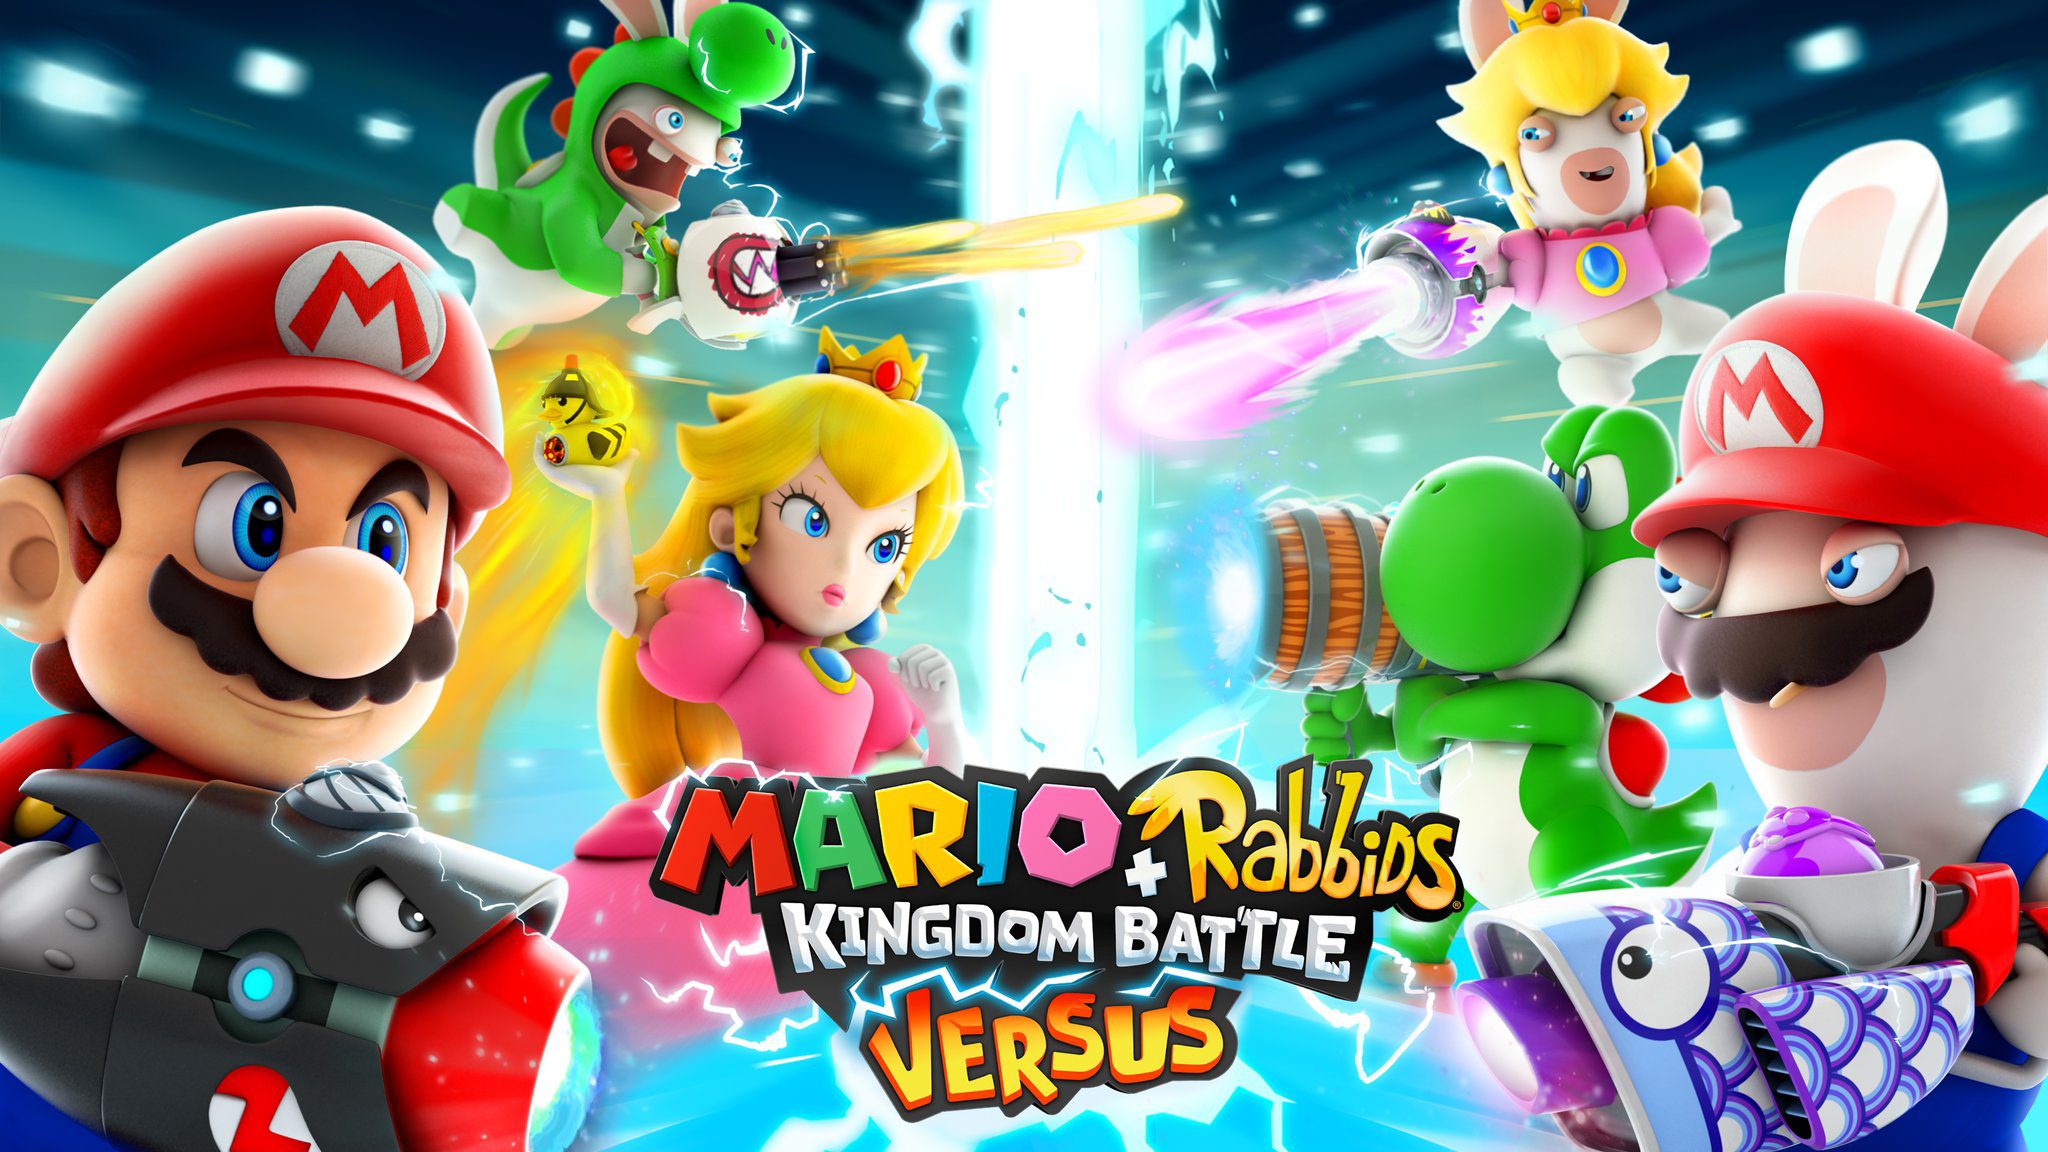 Mario + Rabbids Kingdom Battle Gets Free “Versus Battle” Mode Tomorrow